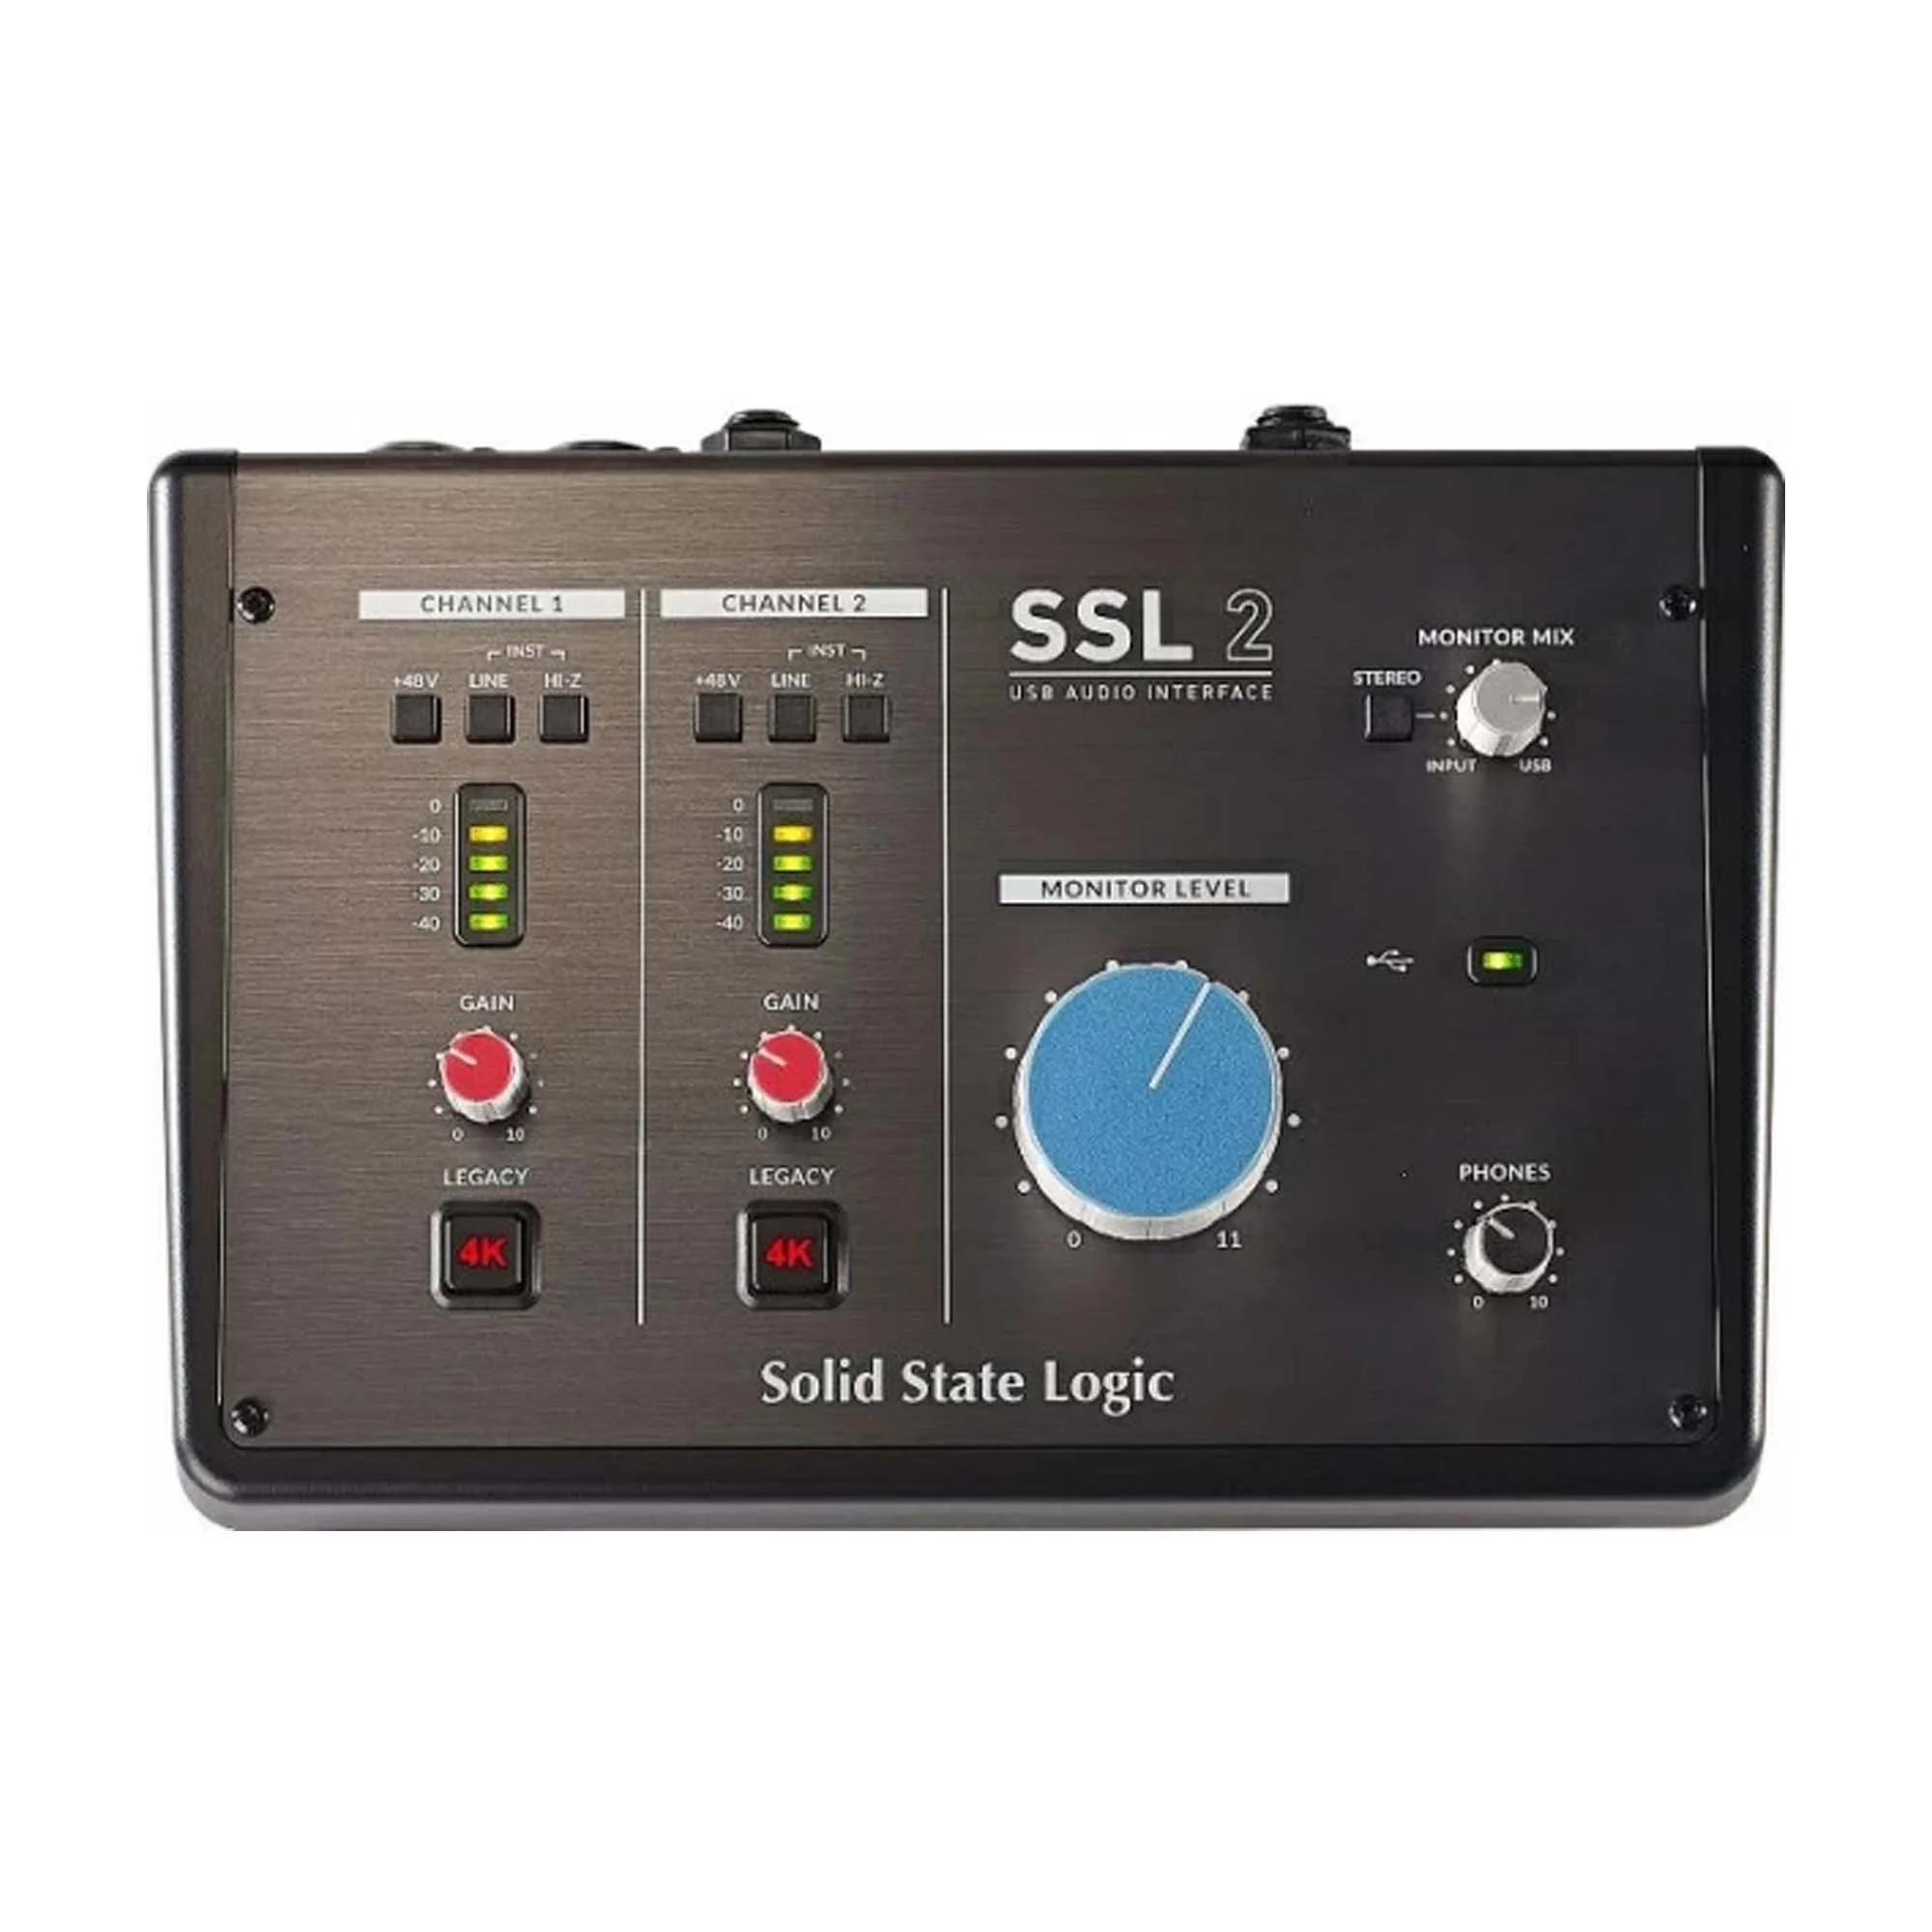 Solid state logic. Solid State Logic 2. Звуковая карта SSL 2+. Ssl2 аудиоинтерфейс. Solid State Logic Audio interface.